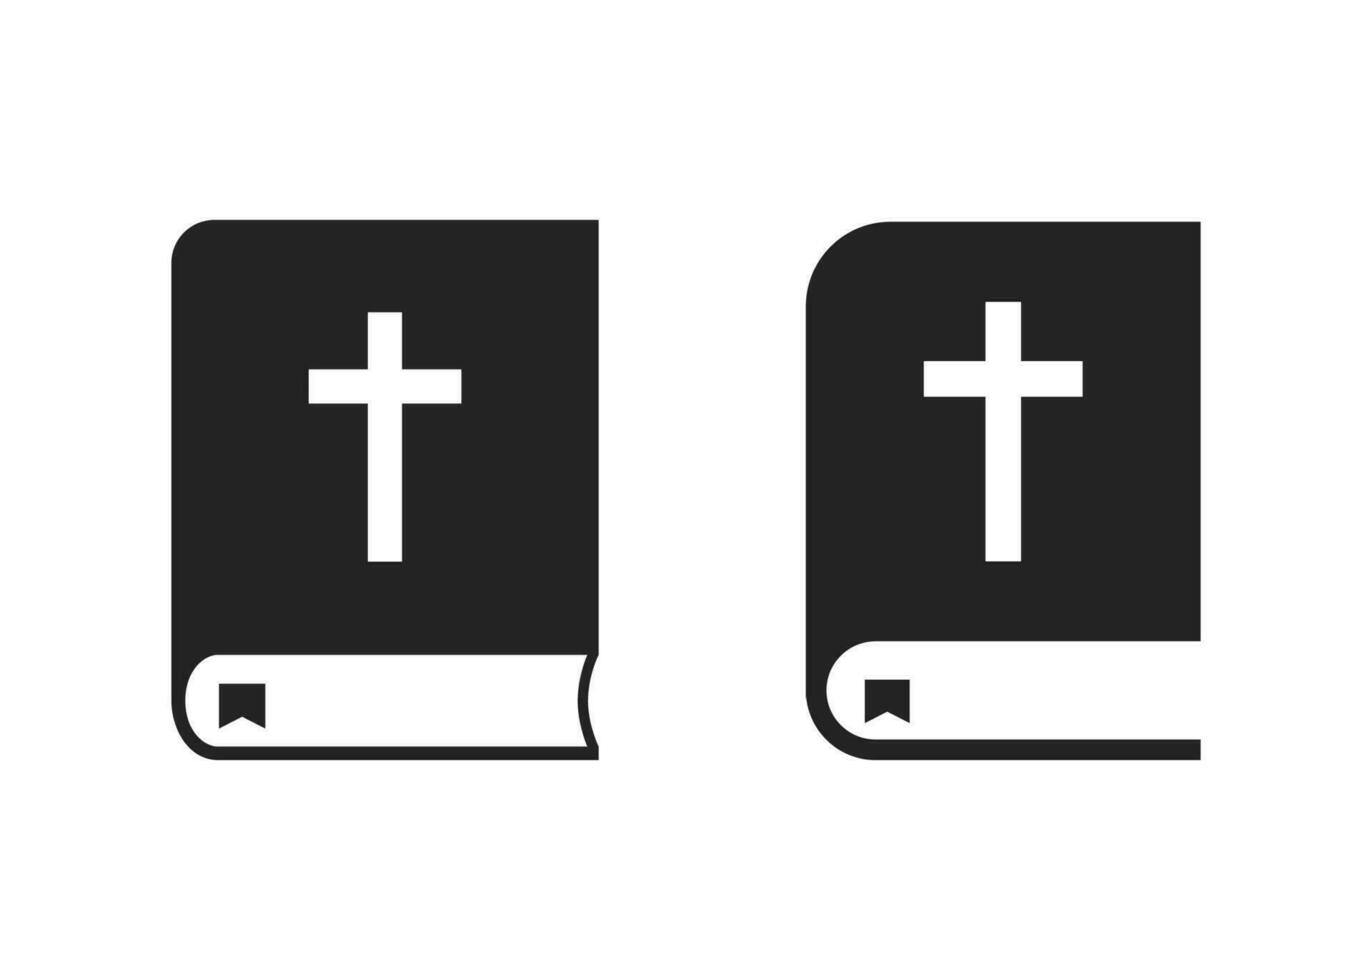 Bíblia vetor ícone conjunto em branco fundo.